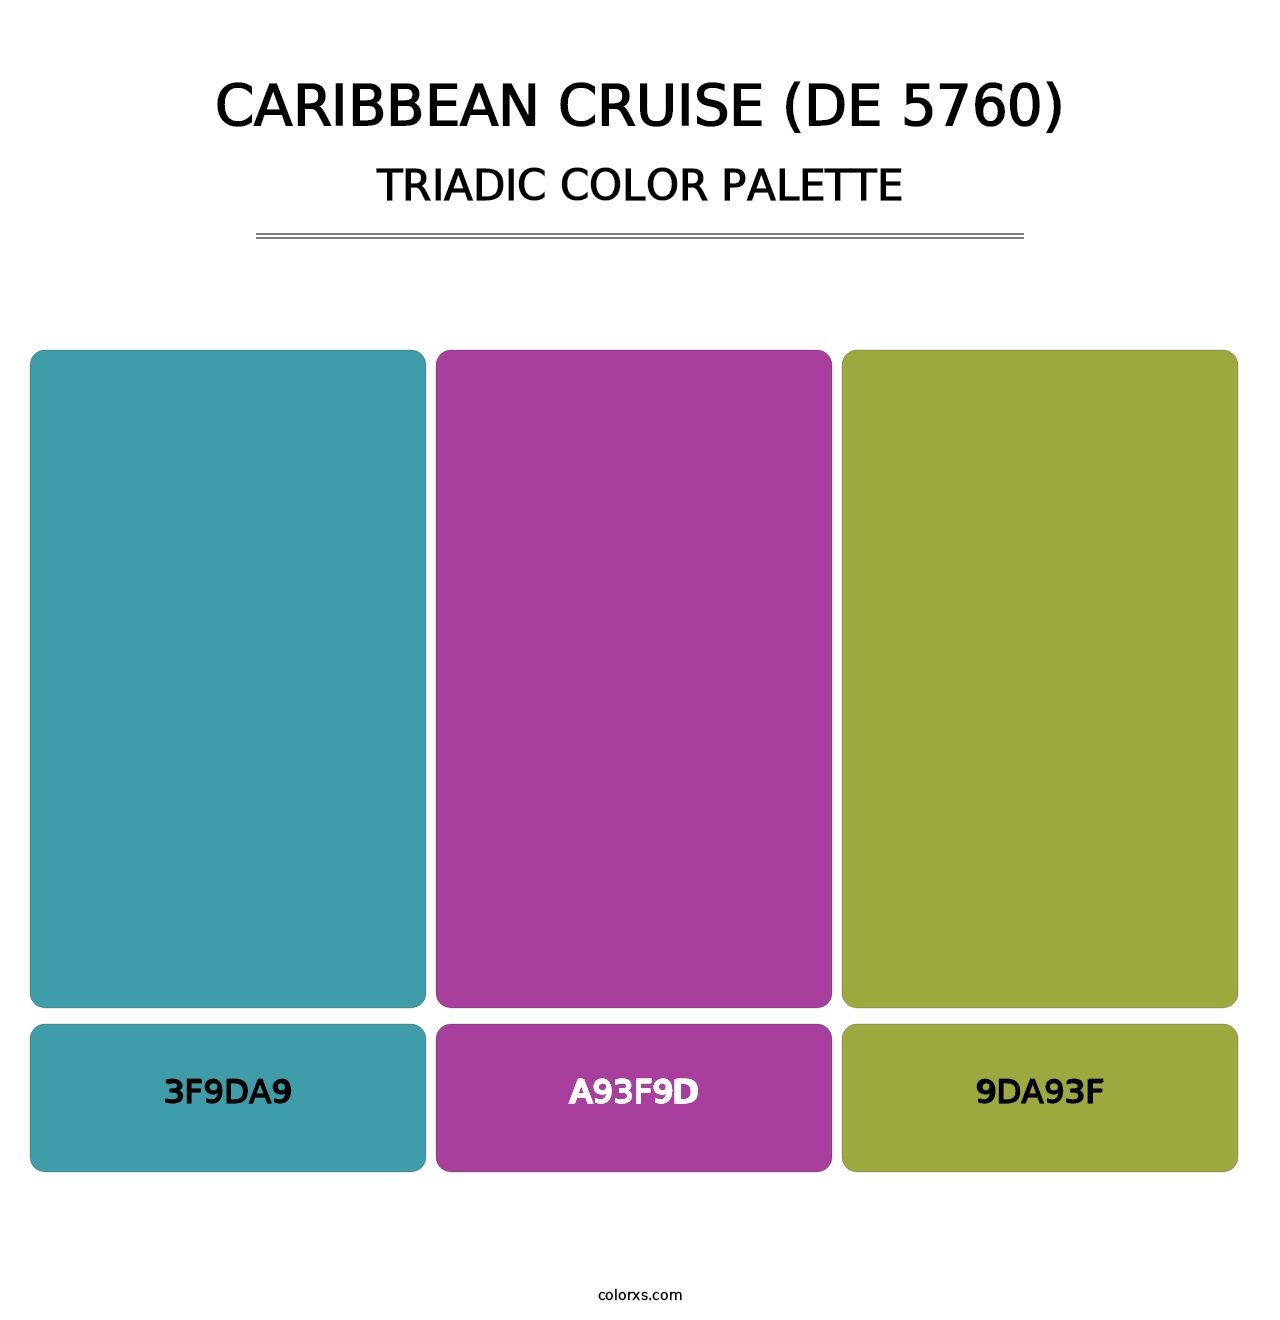 Caribbean Cruise (DE 5760) - Triadic Color Palette